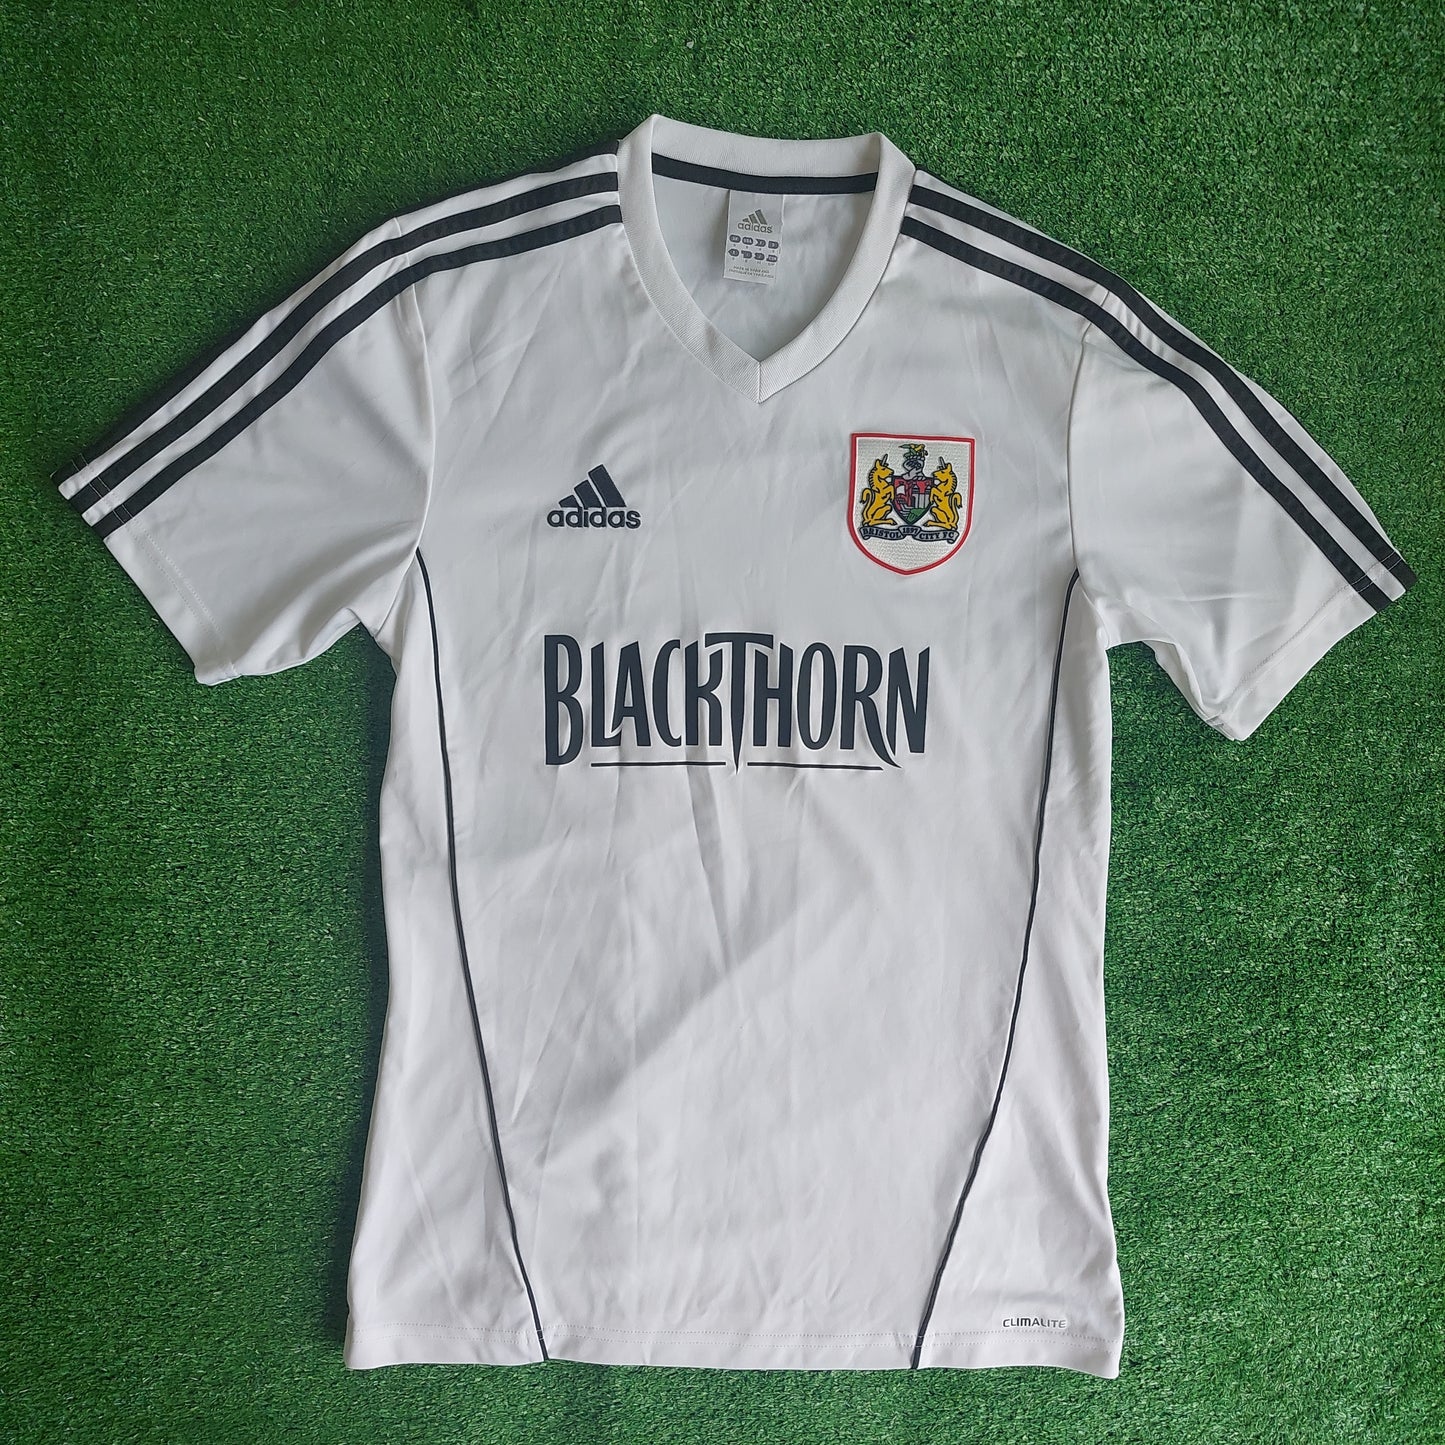 Bristol City 2012/13 Away Shirt (Excellent) - Size S